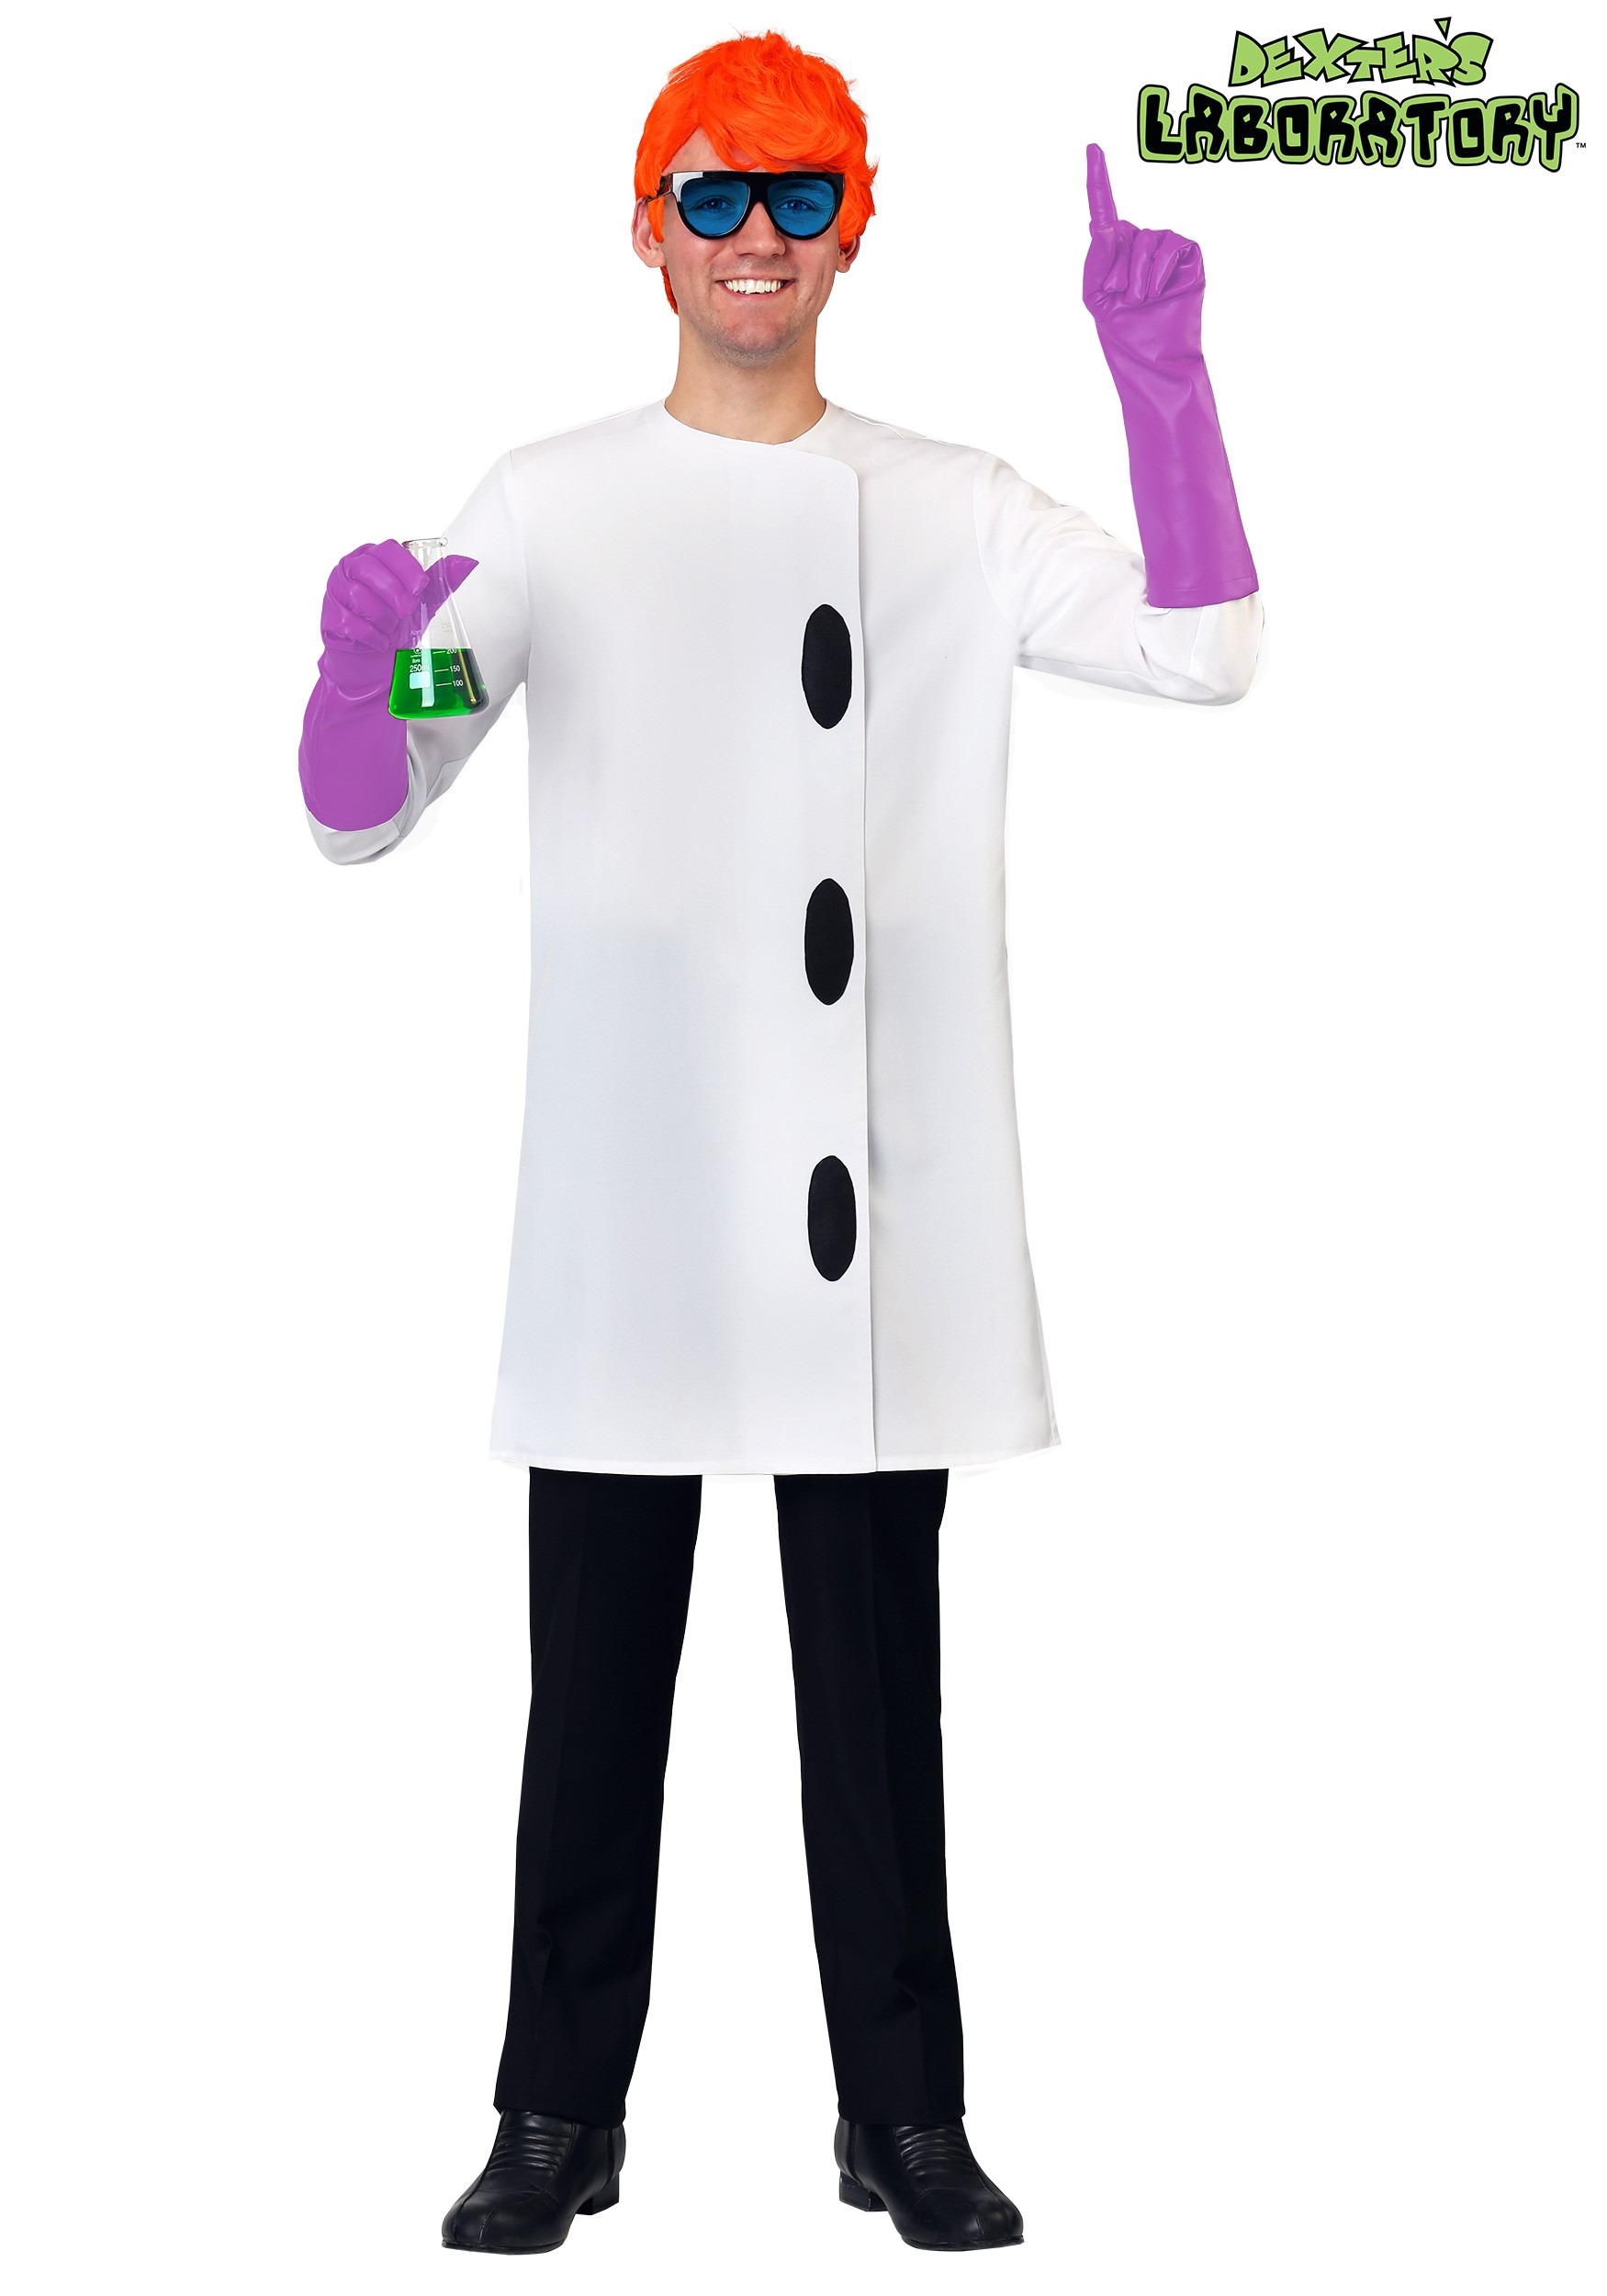 Dexters Laboratory Dexter Costume For Adults.